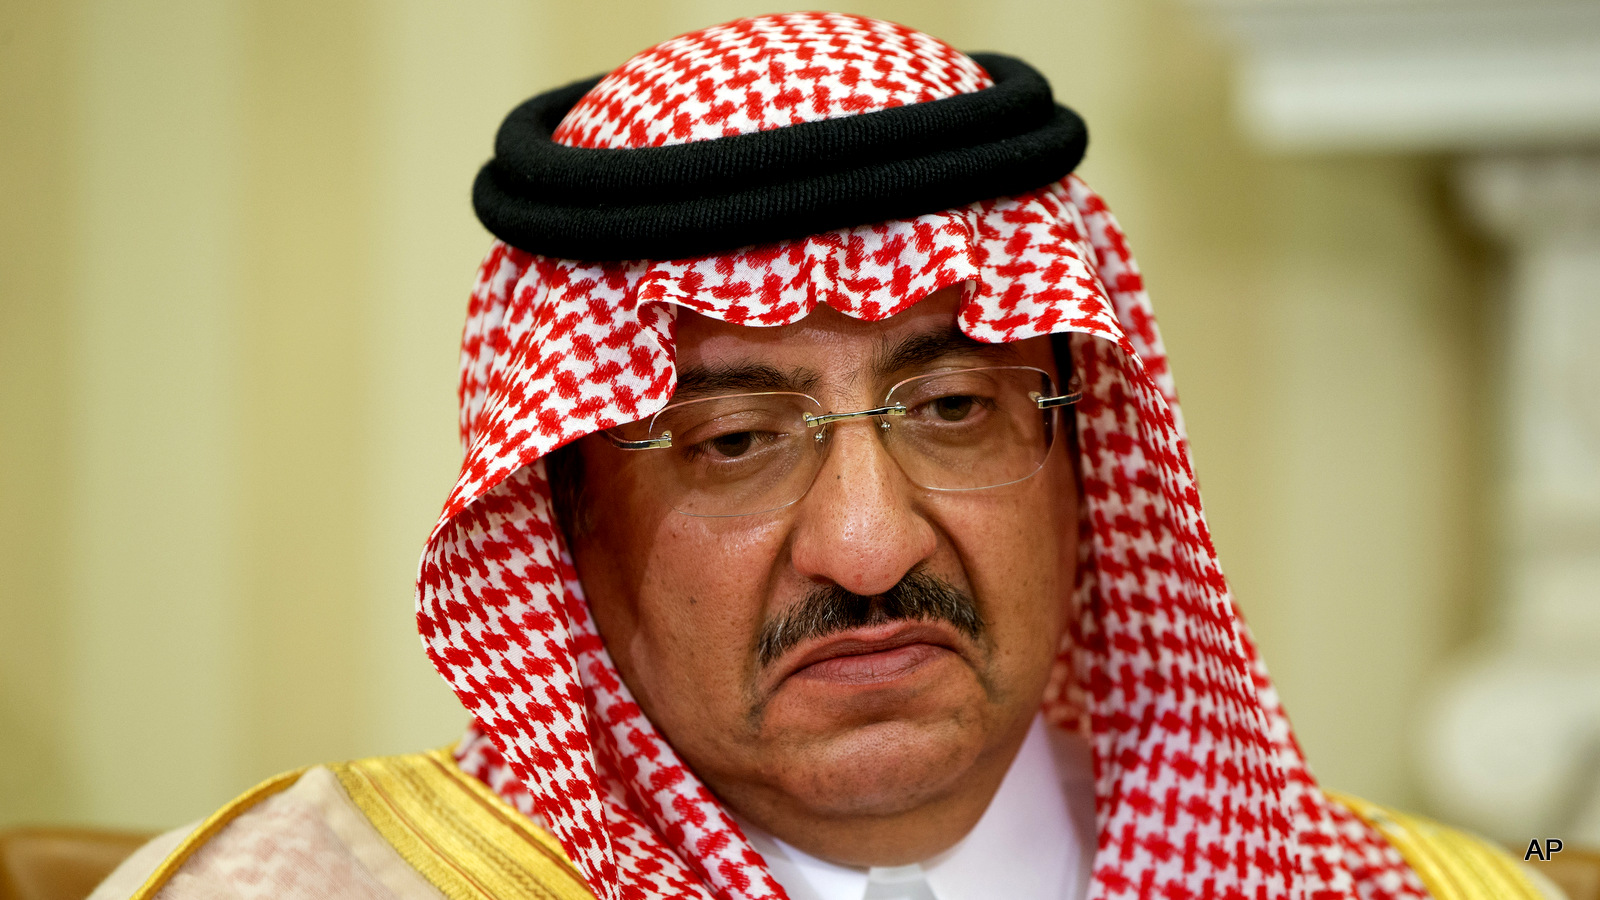 Saudi Arabian Crown Prince Mohammed bin Nayef